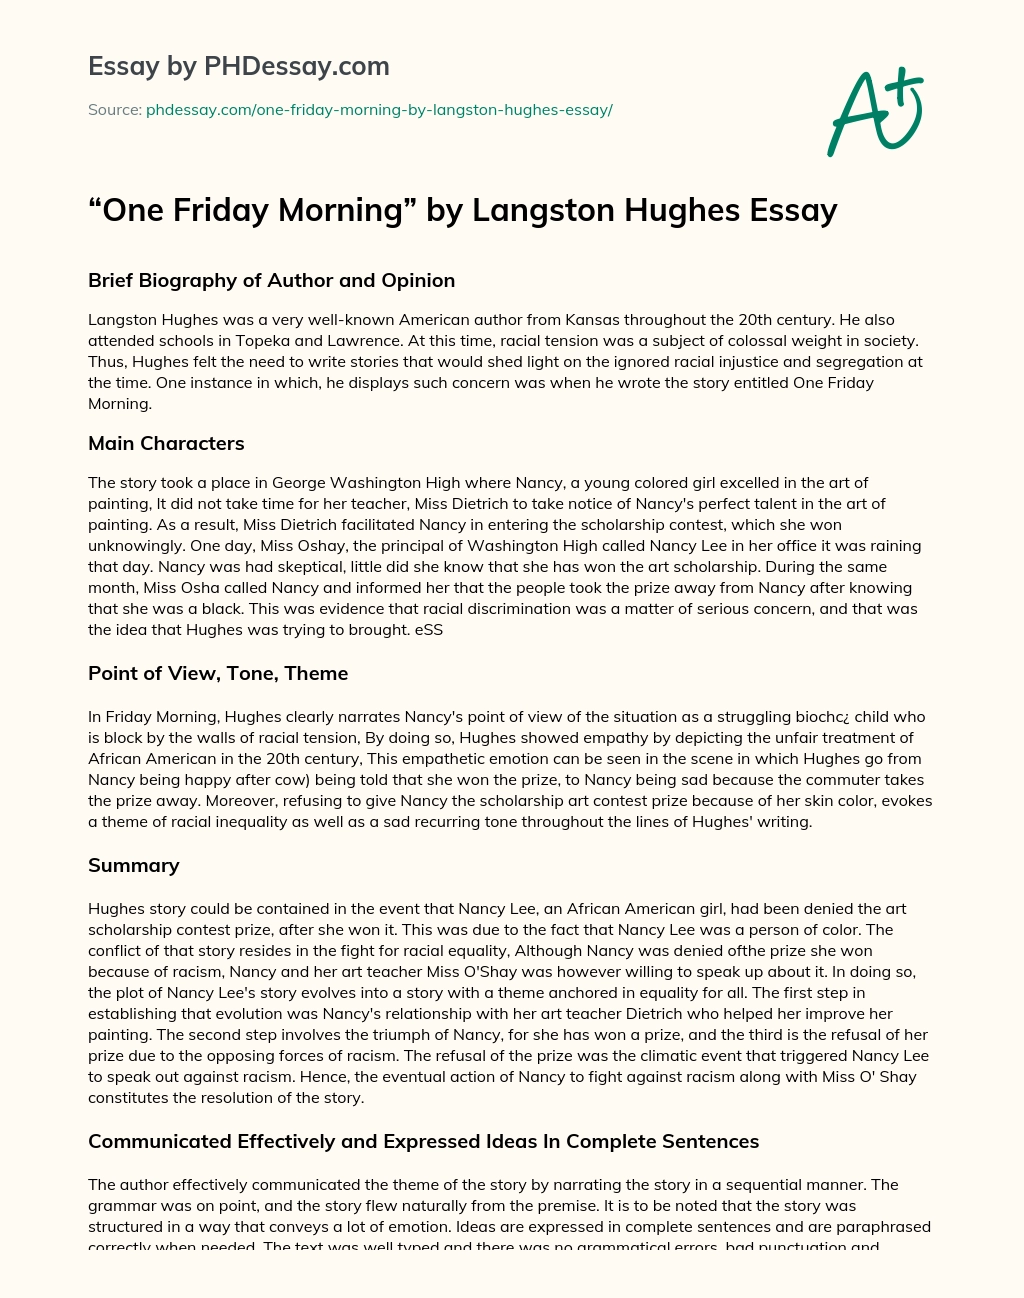 One Friday Morning by Langston Hughes Essay essay